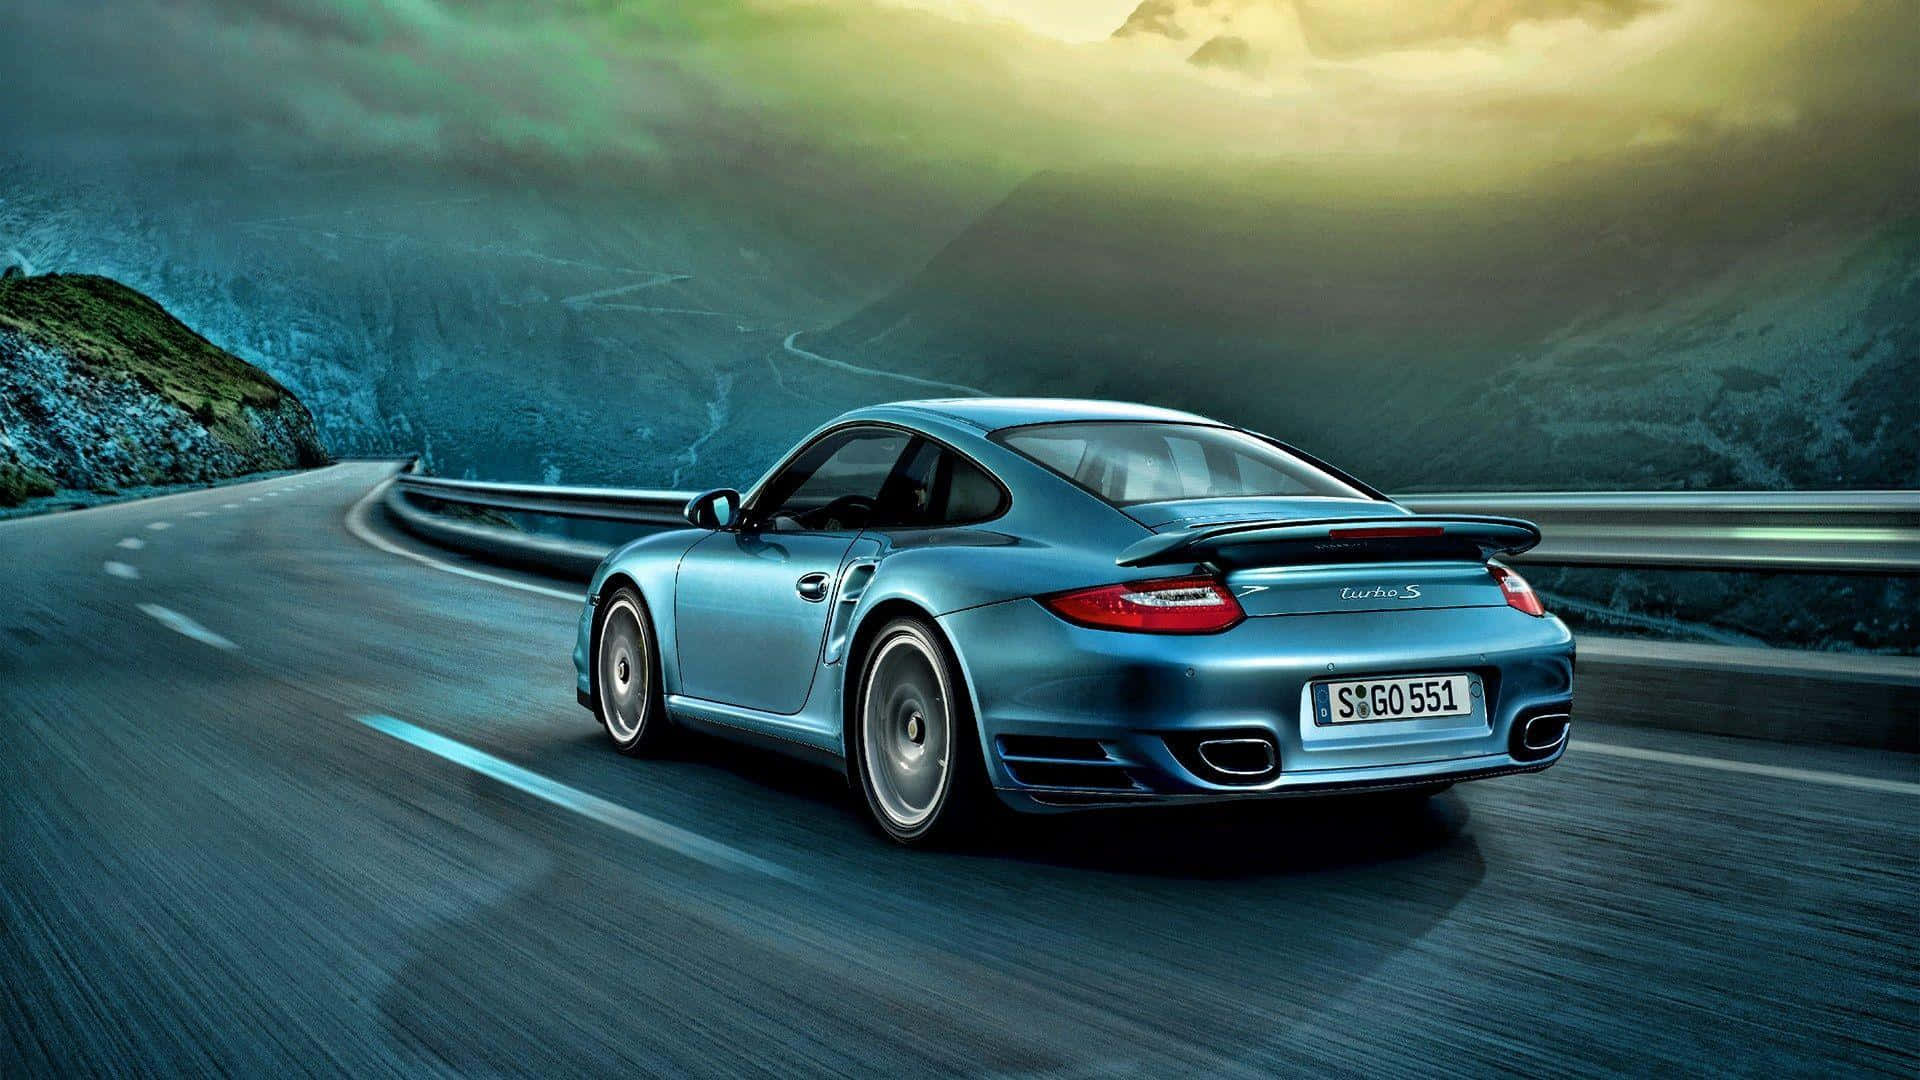 Sleek Porsche Sports Car in Motion